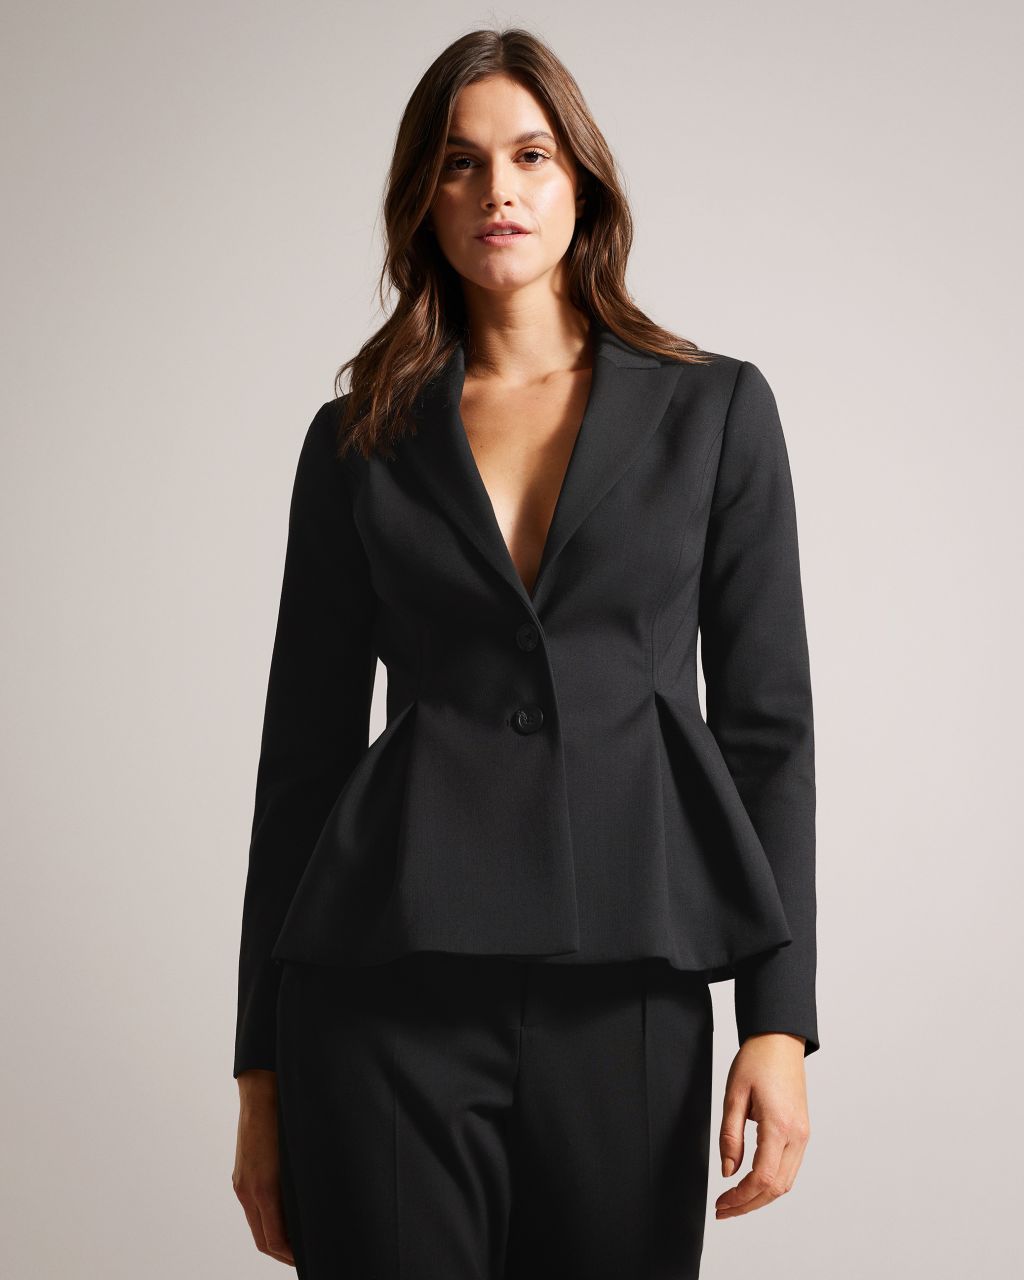 Women's Peplum Waist Suit Jacket in Black, Philiya product